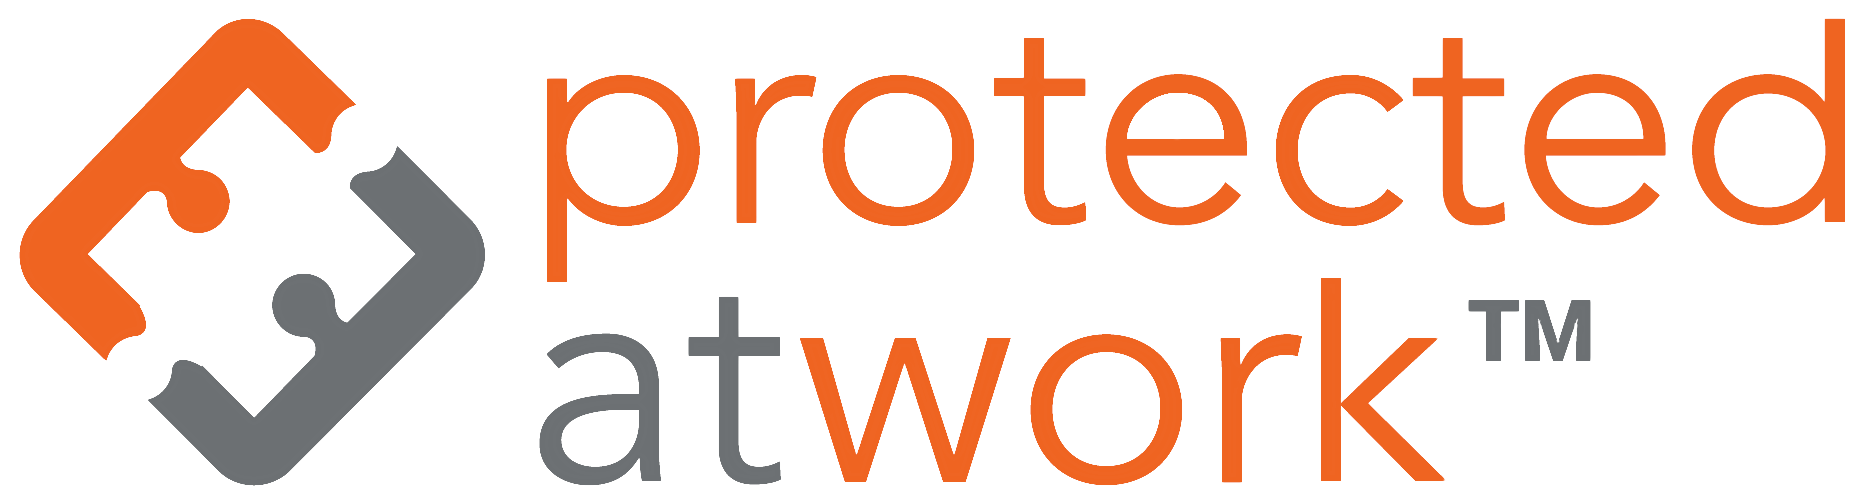 Protected at Work logo